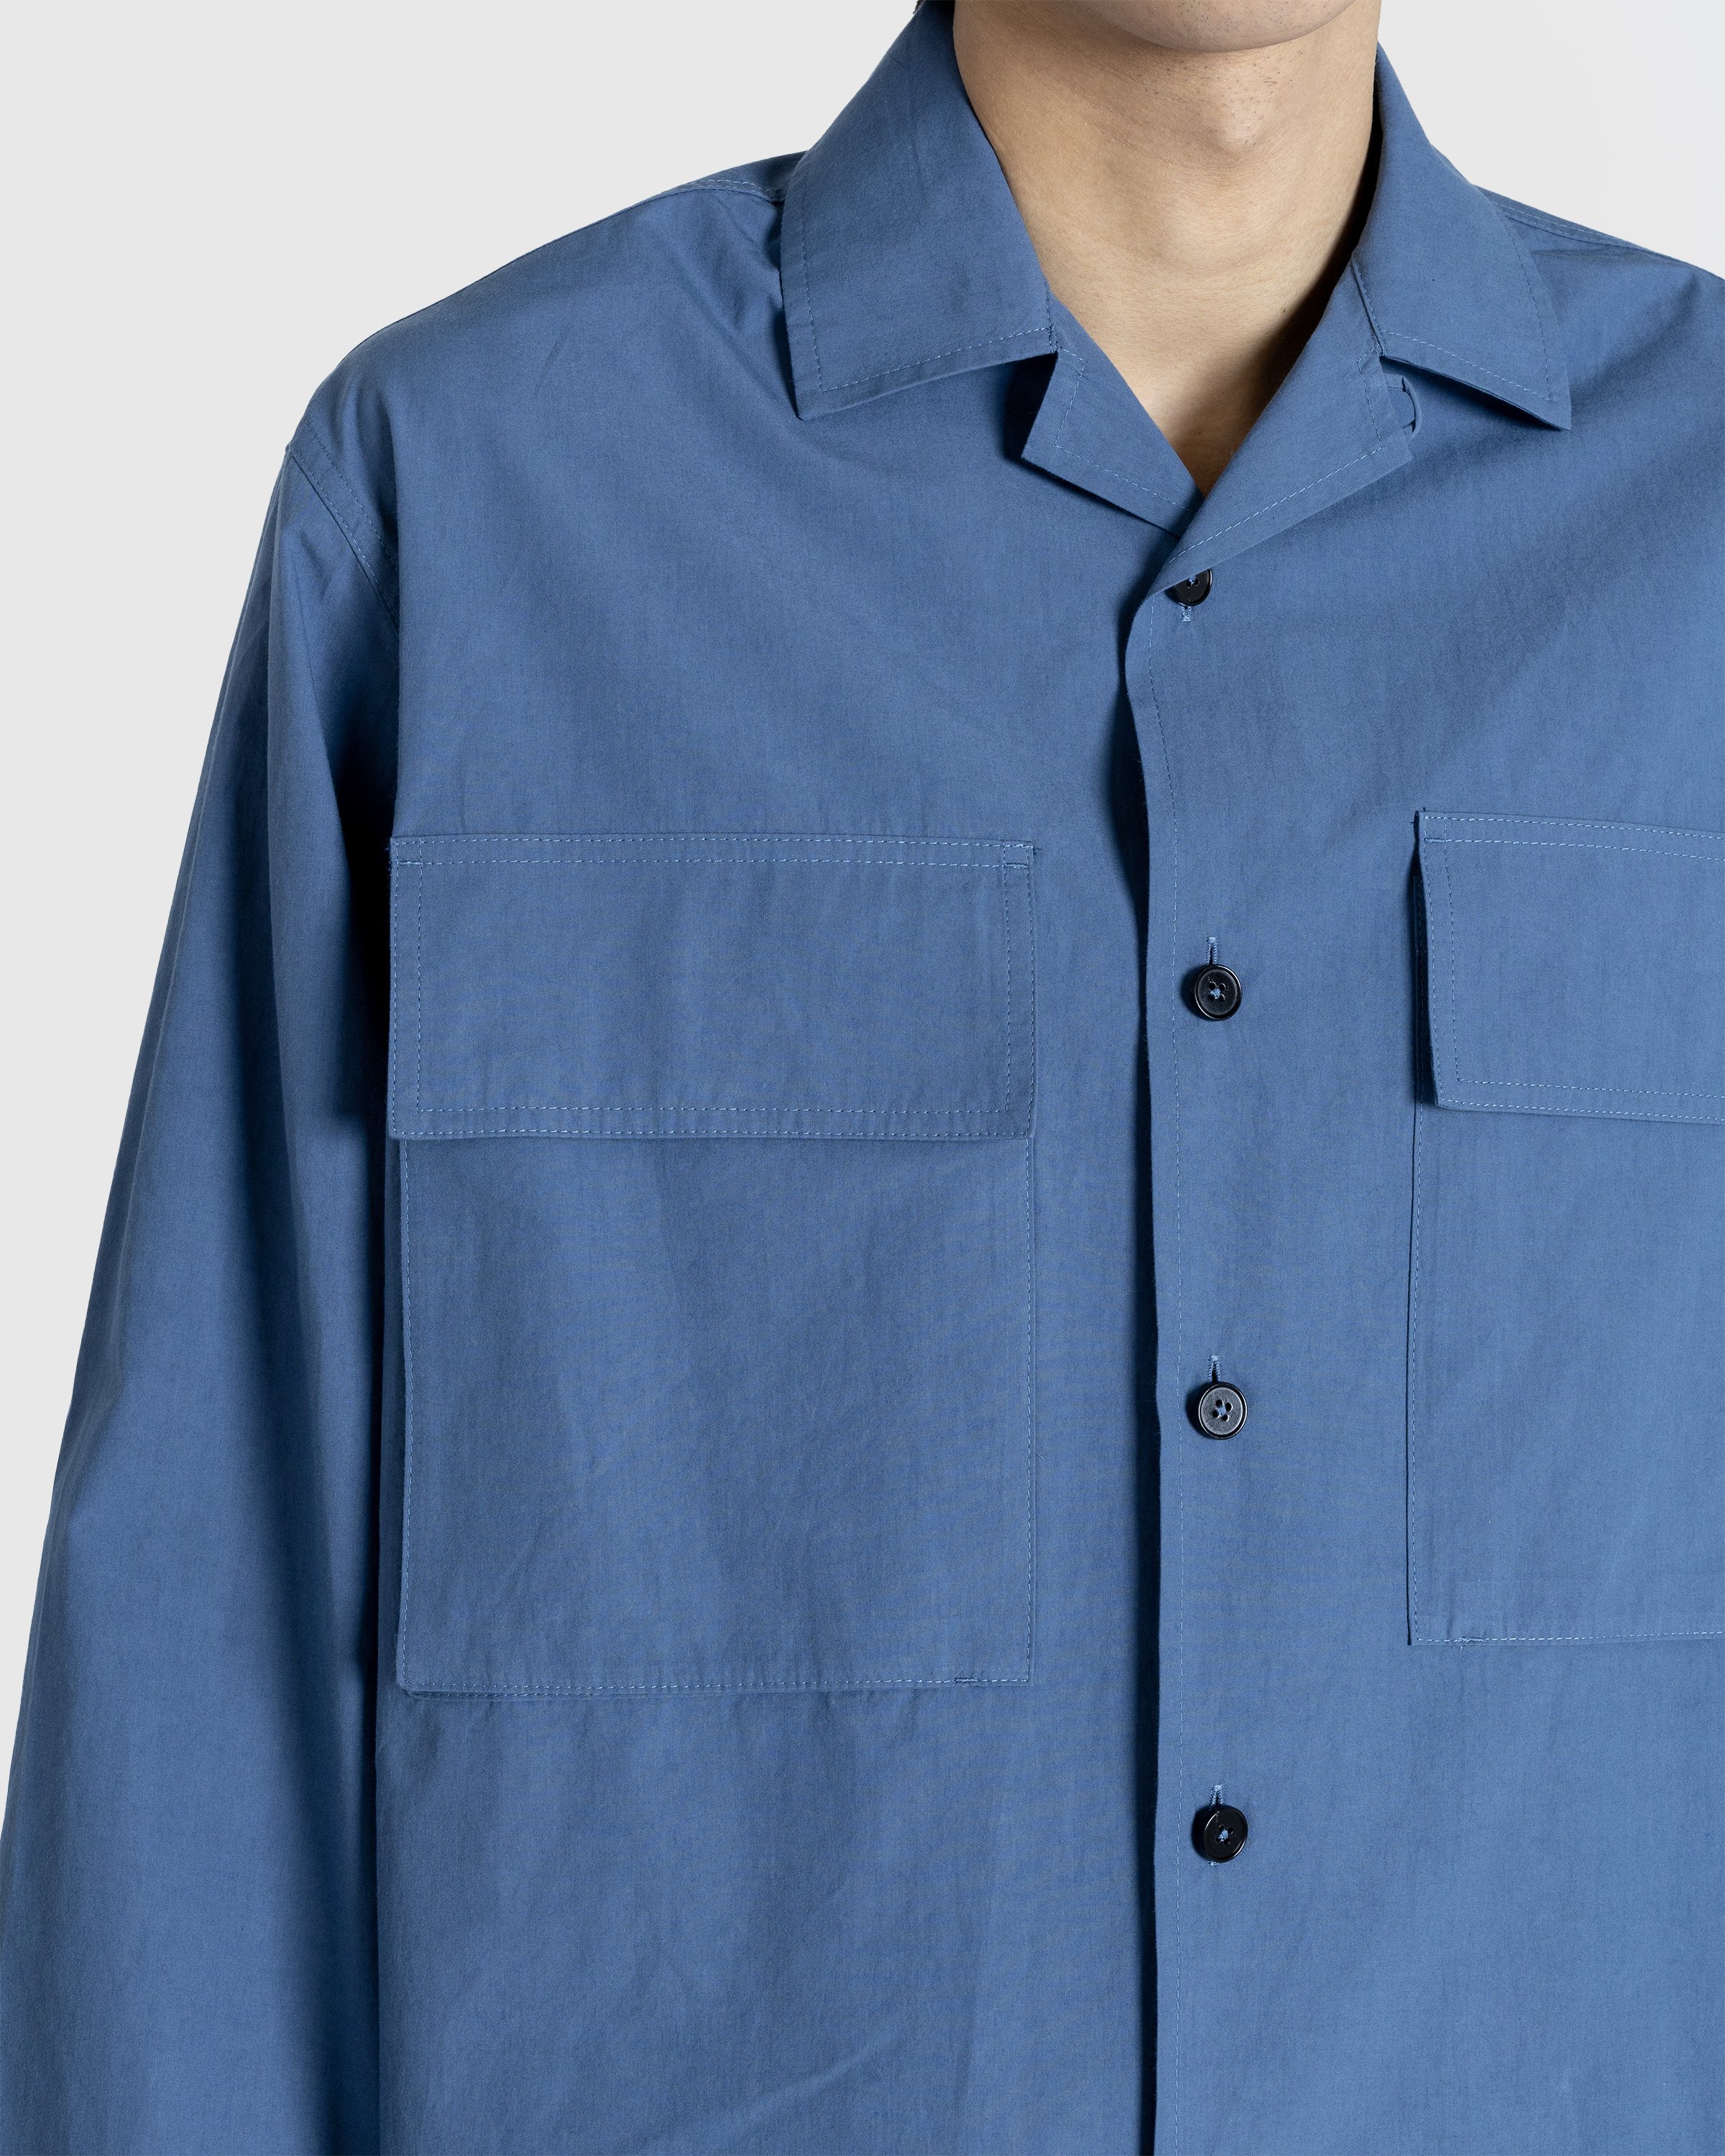 Jil Sander - Shirt 40 - Clothing - Blue - Image 5